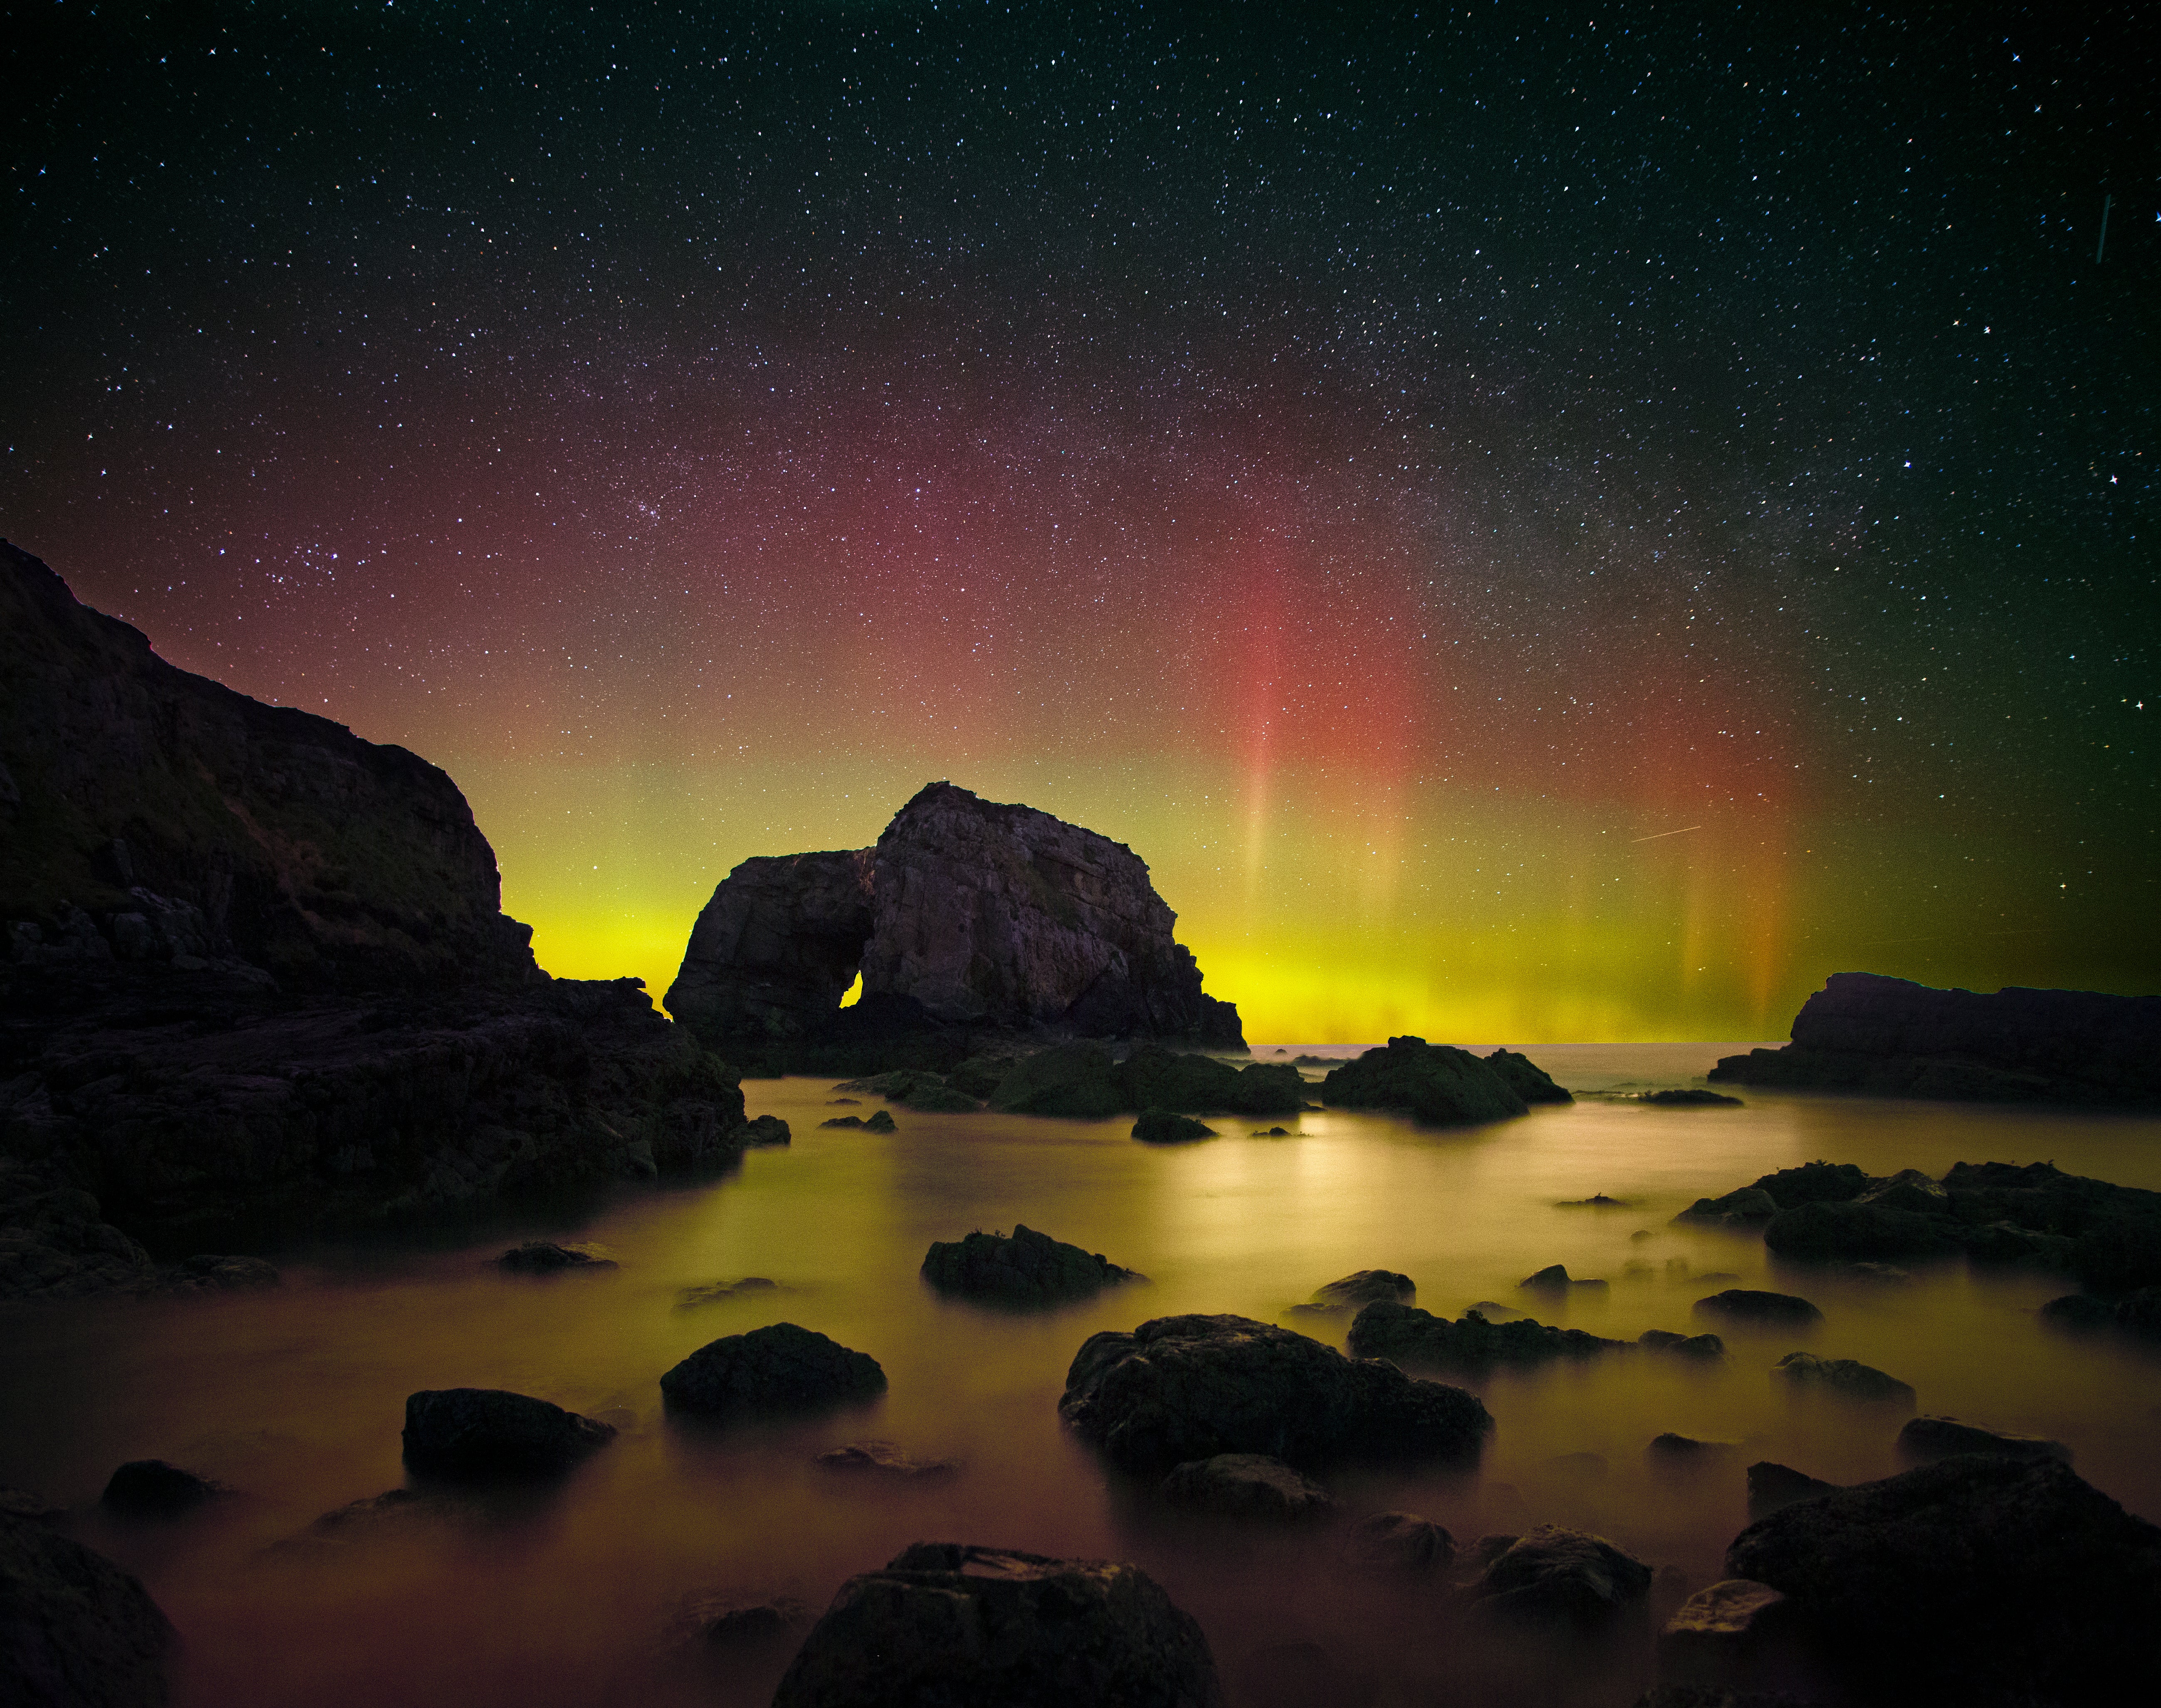 The aurora as seen from Ireland. (Photo: Brendan Alexander)